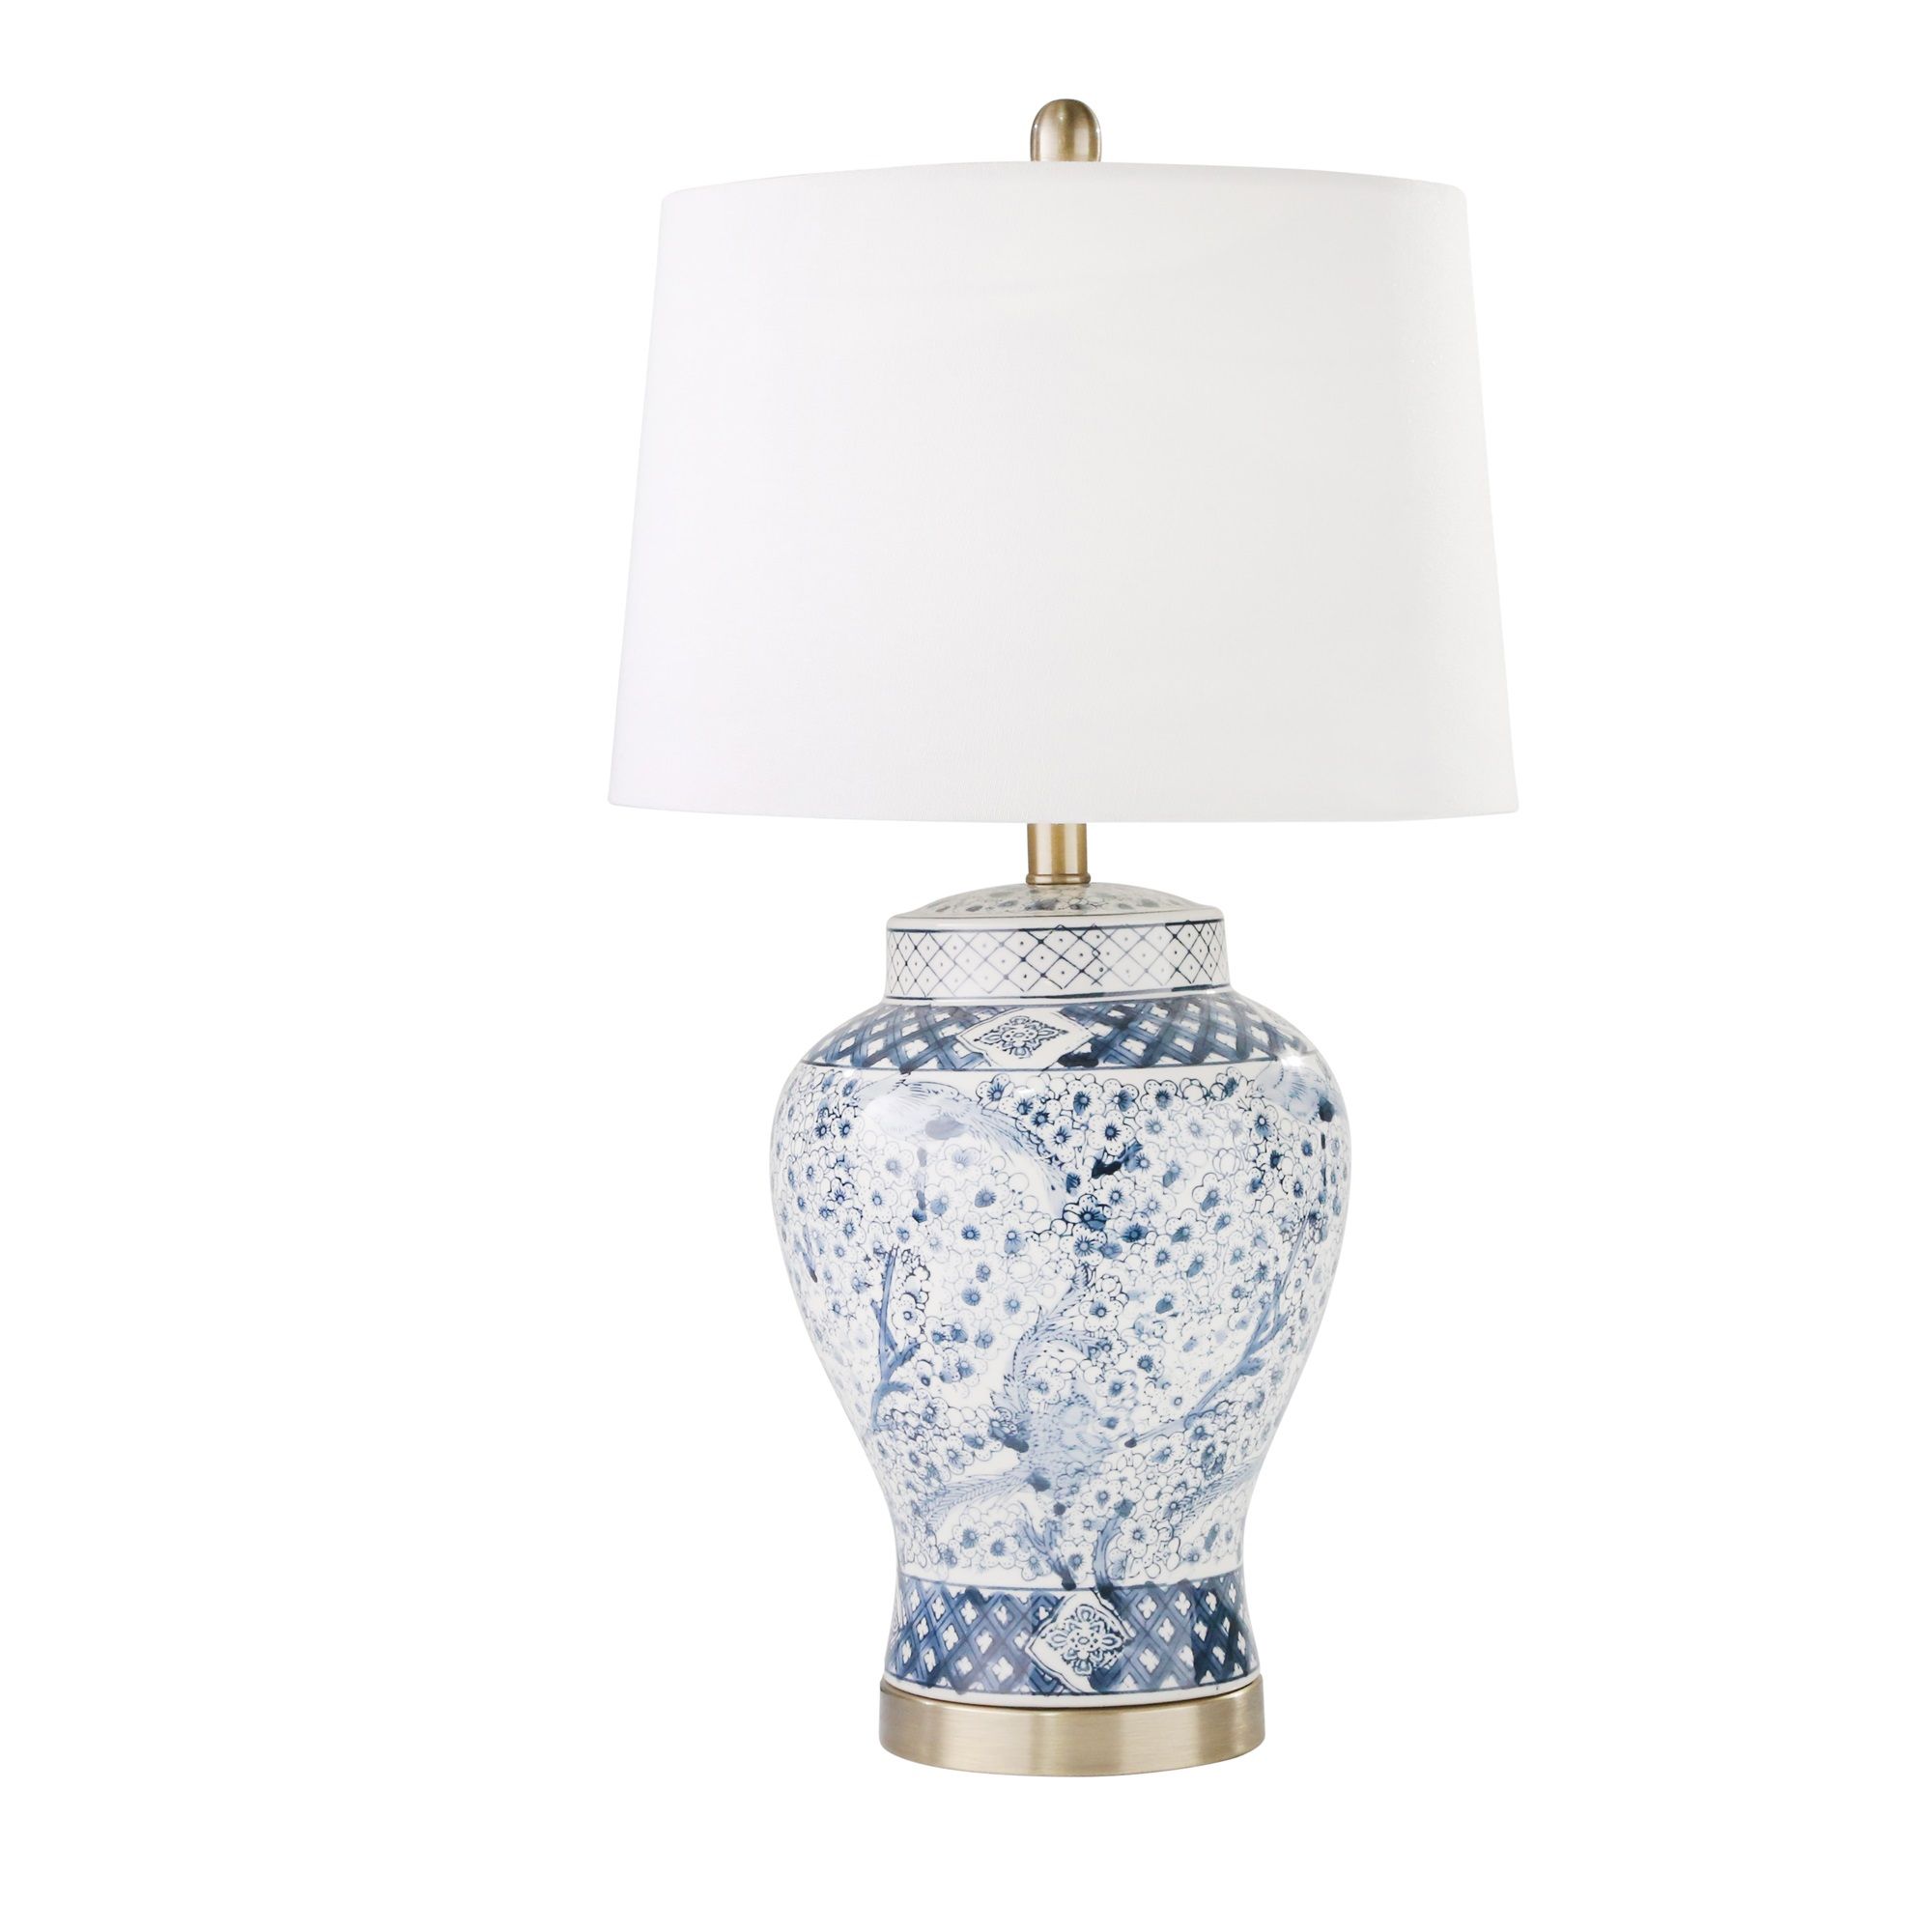 CERAMIC 27" GINGER JAR TABLE LAMP, BLUE/WHITE | Walmart (US)